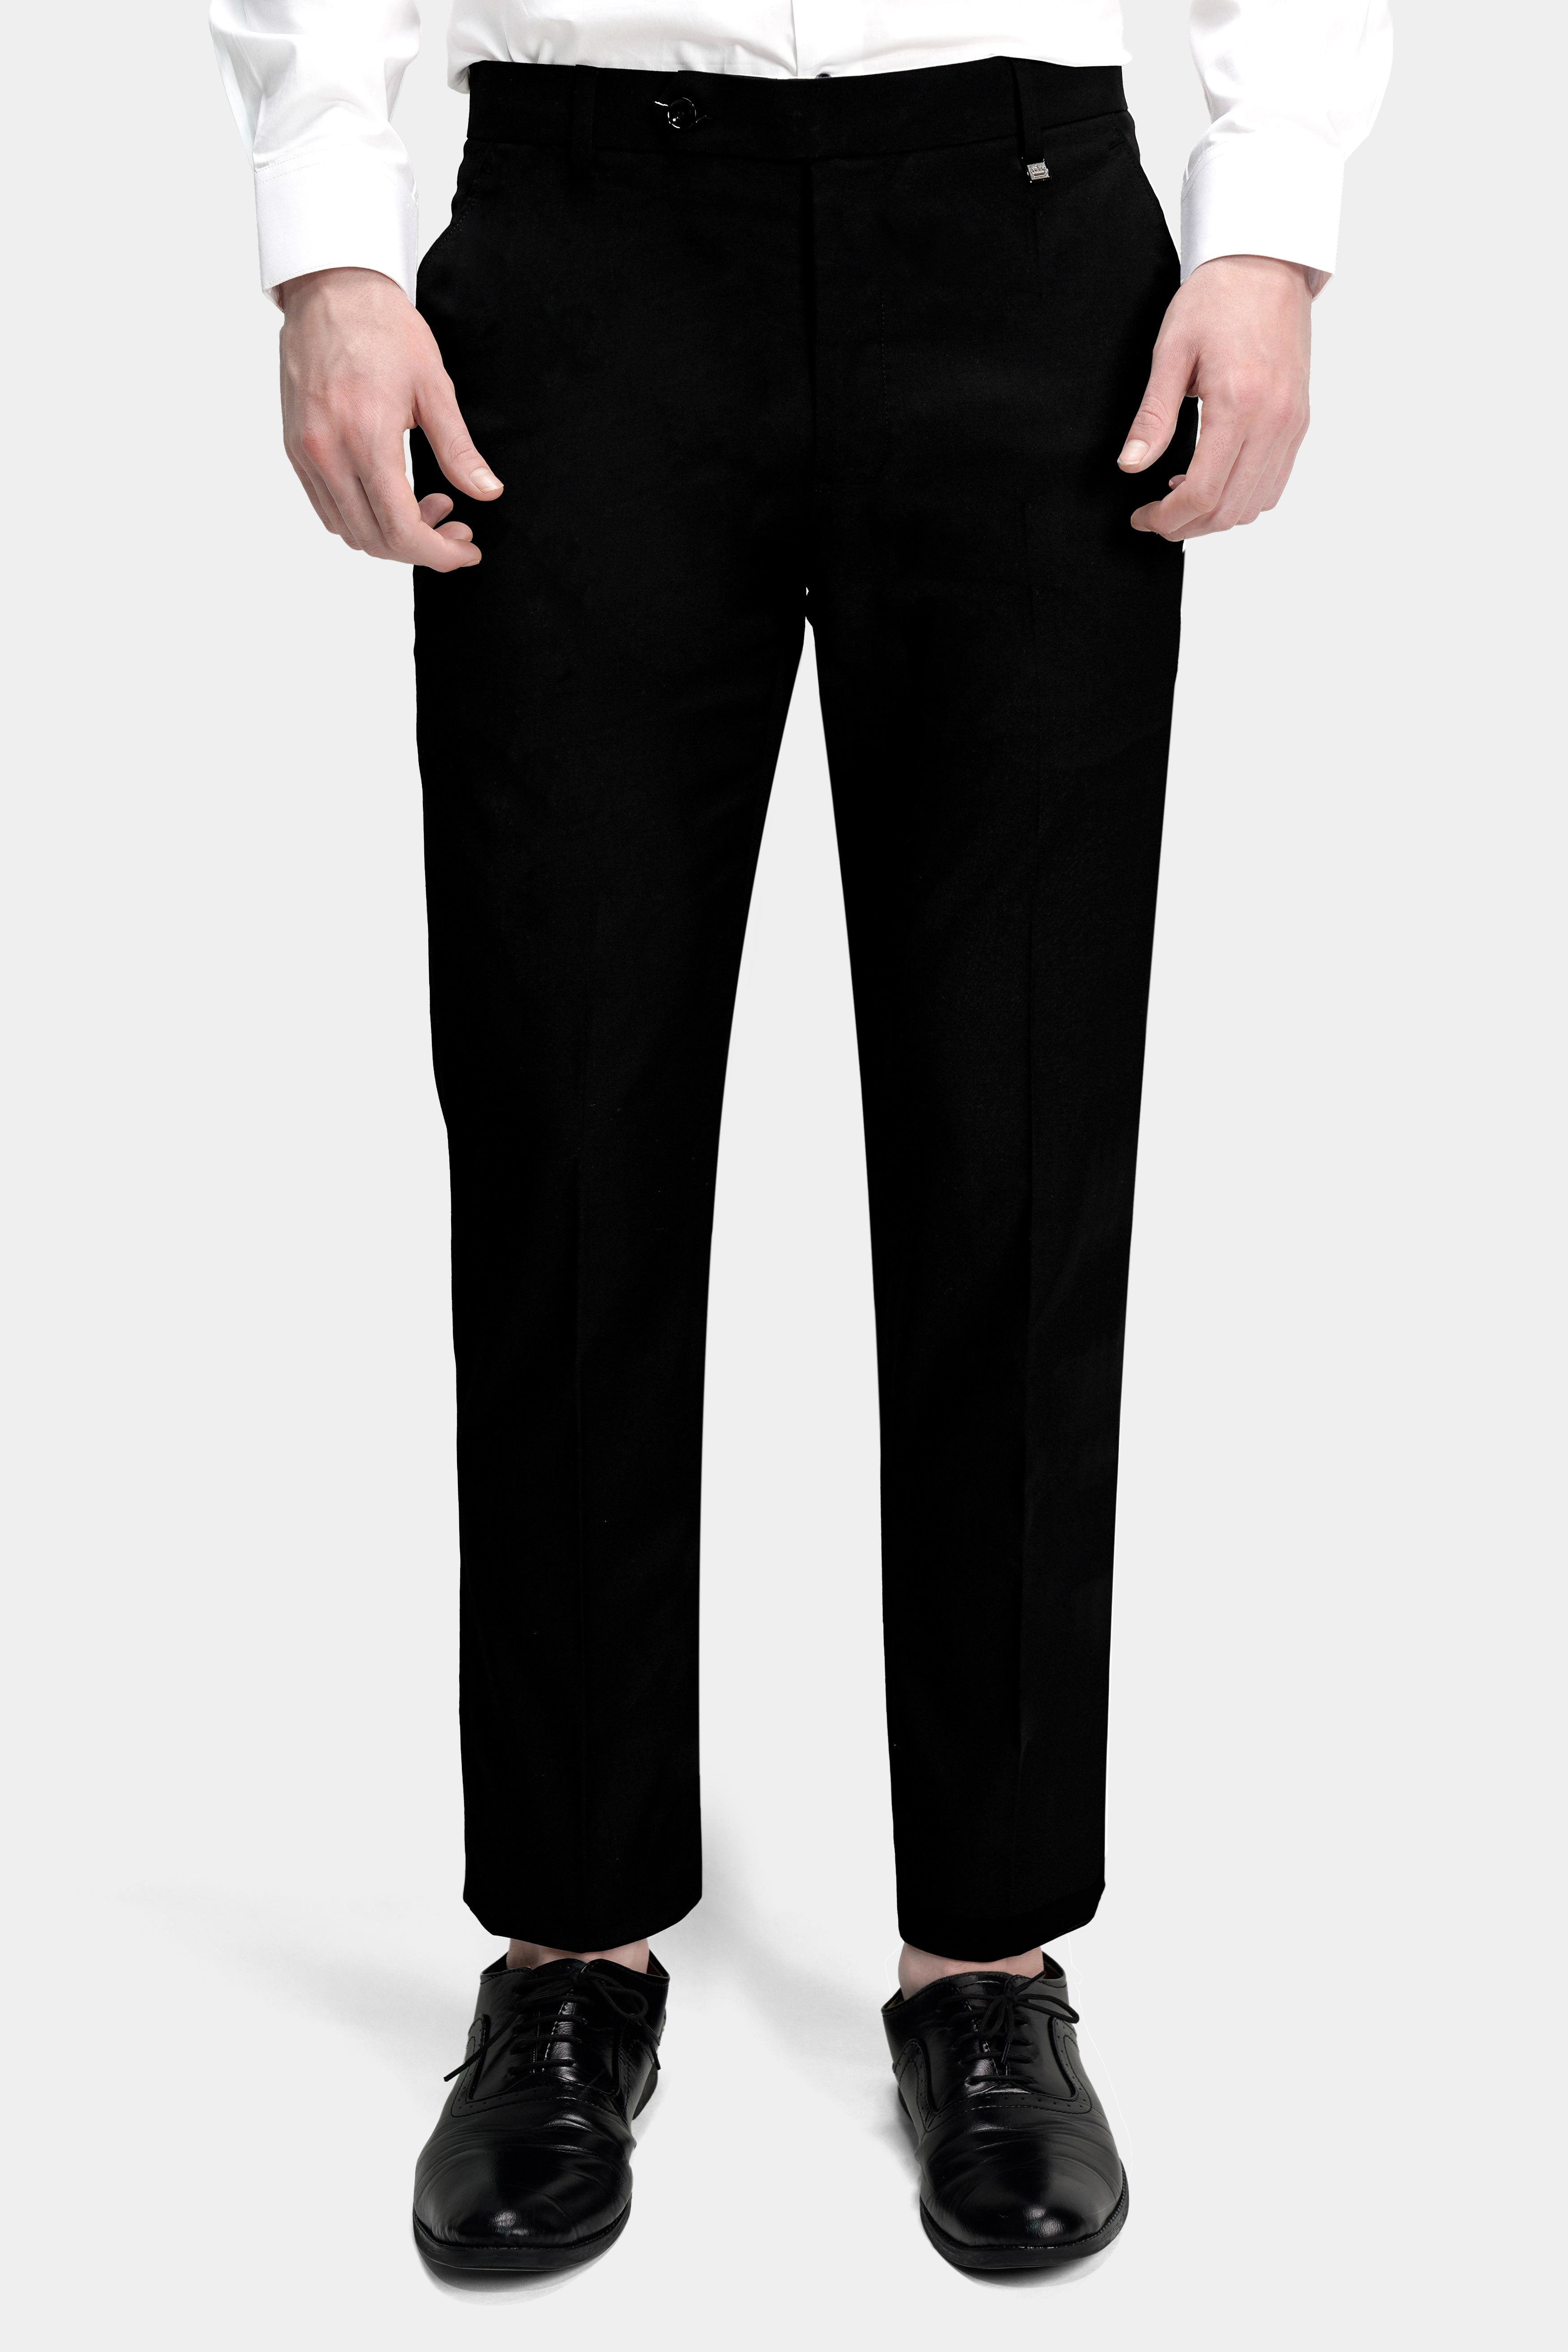 Corporate Trouser black, trouser, formal trousers